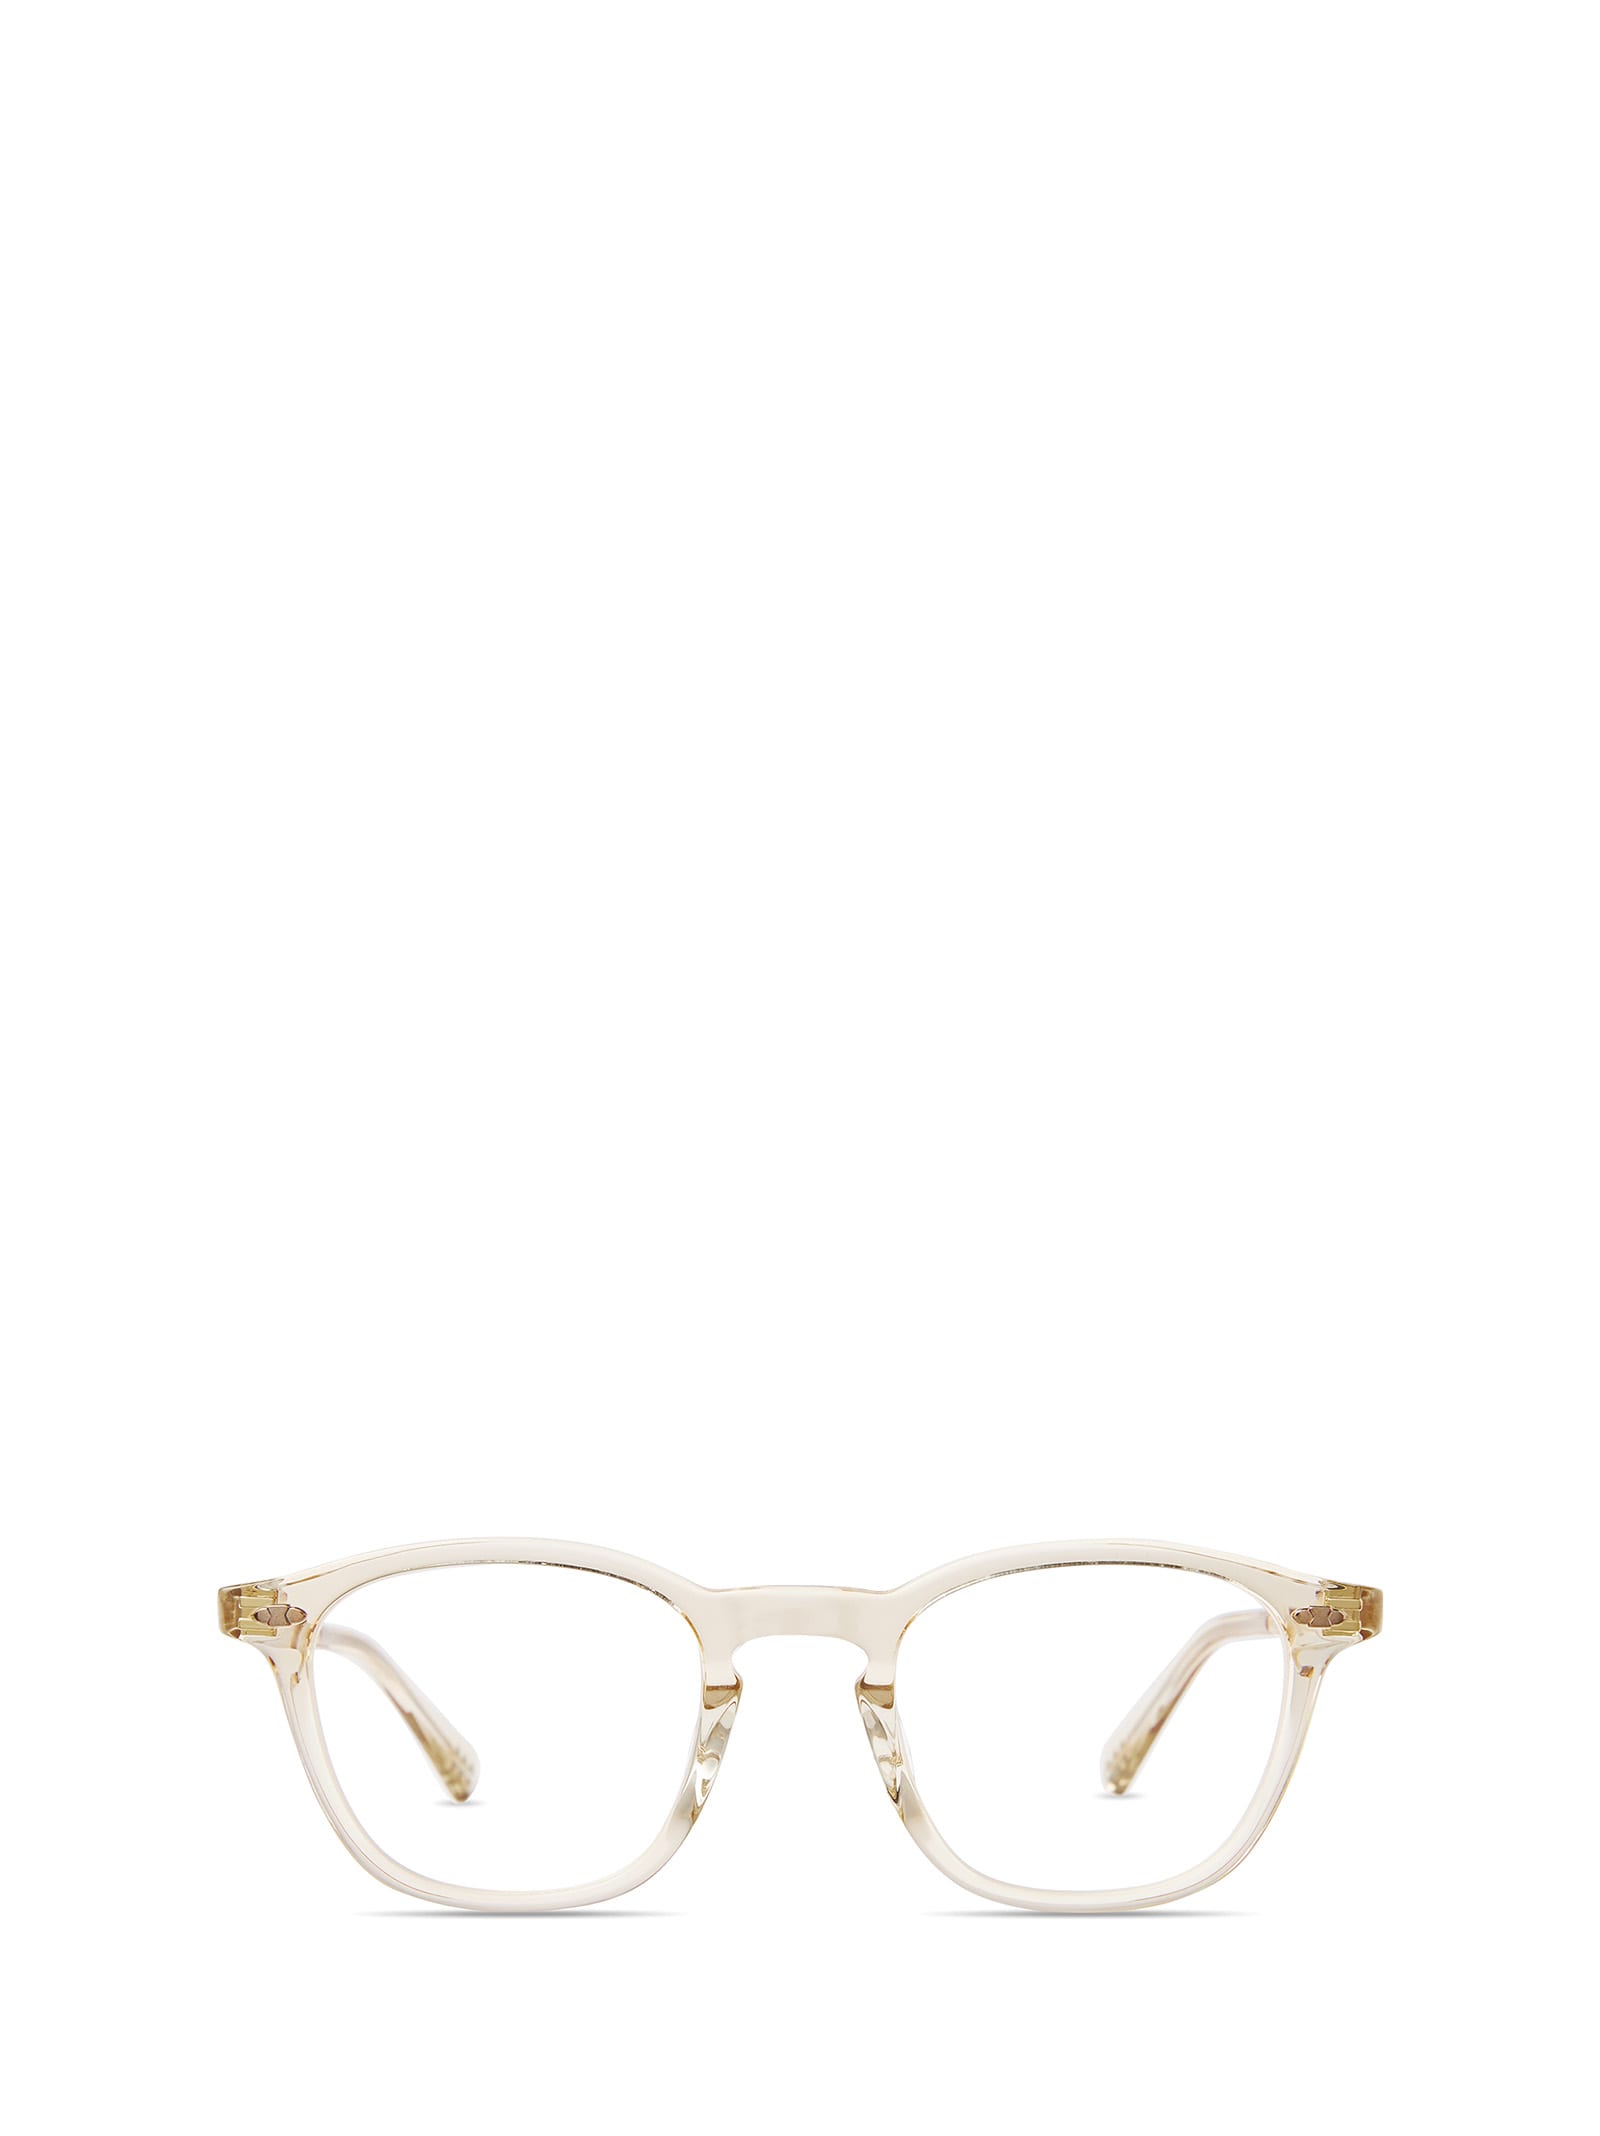 Mr Leight Devon C Chandelier-copper Glasses